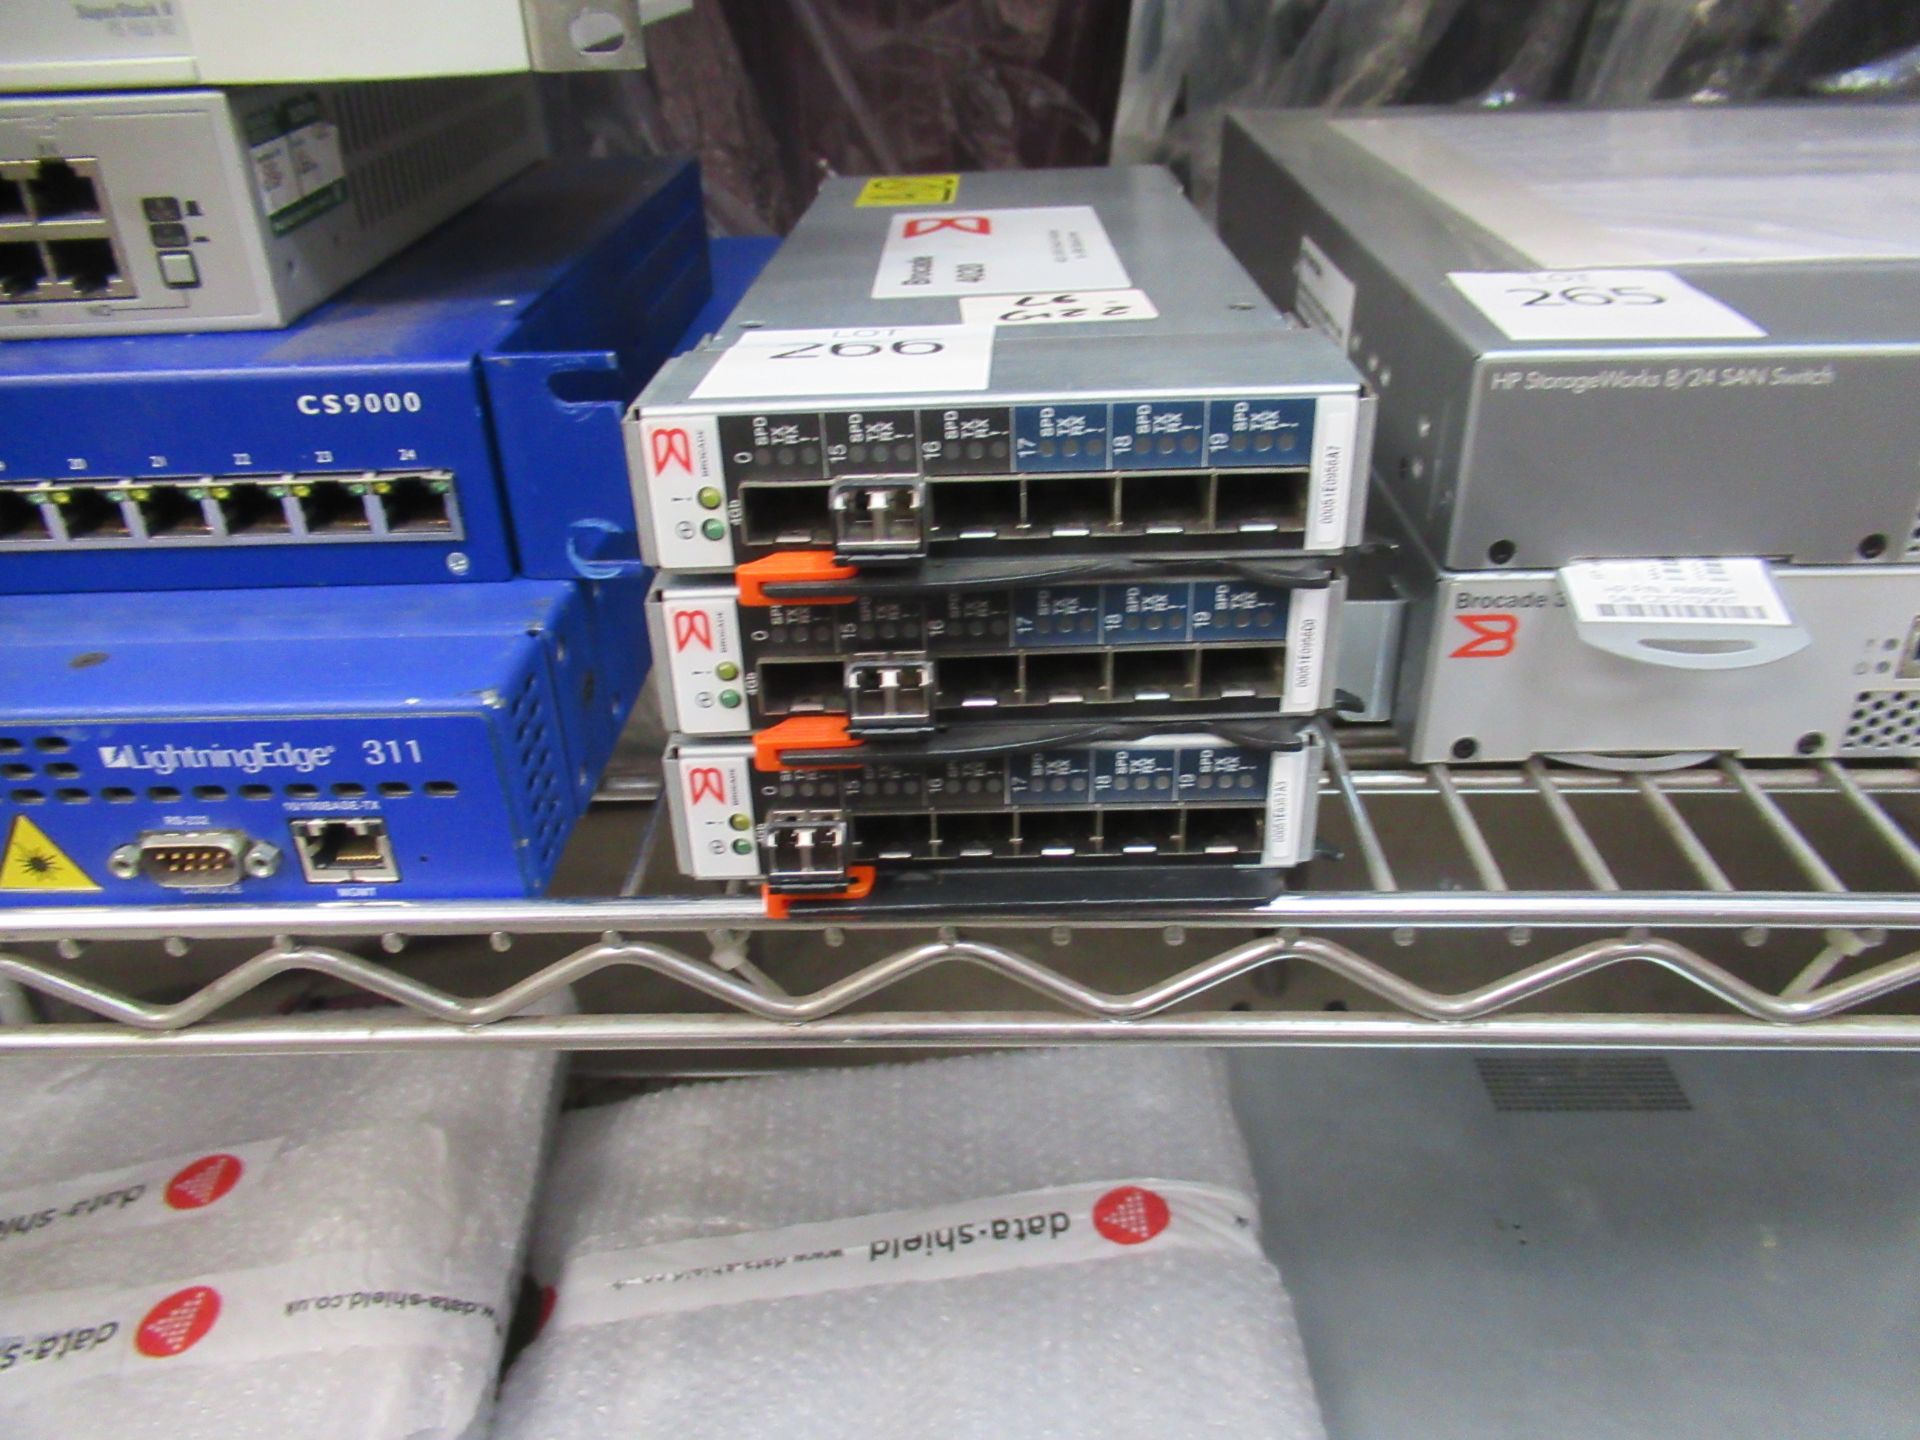 2 x McData 4300 switch, 2 x QLogic SANbox 3800 switch, Qlogic 3800, 1 x Brocade 200e switch, 200e - Image 34 of 40